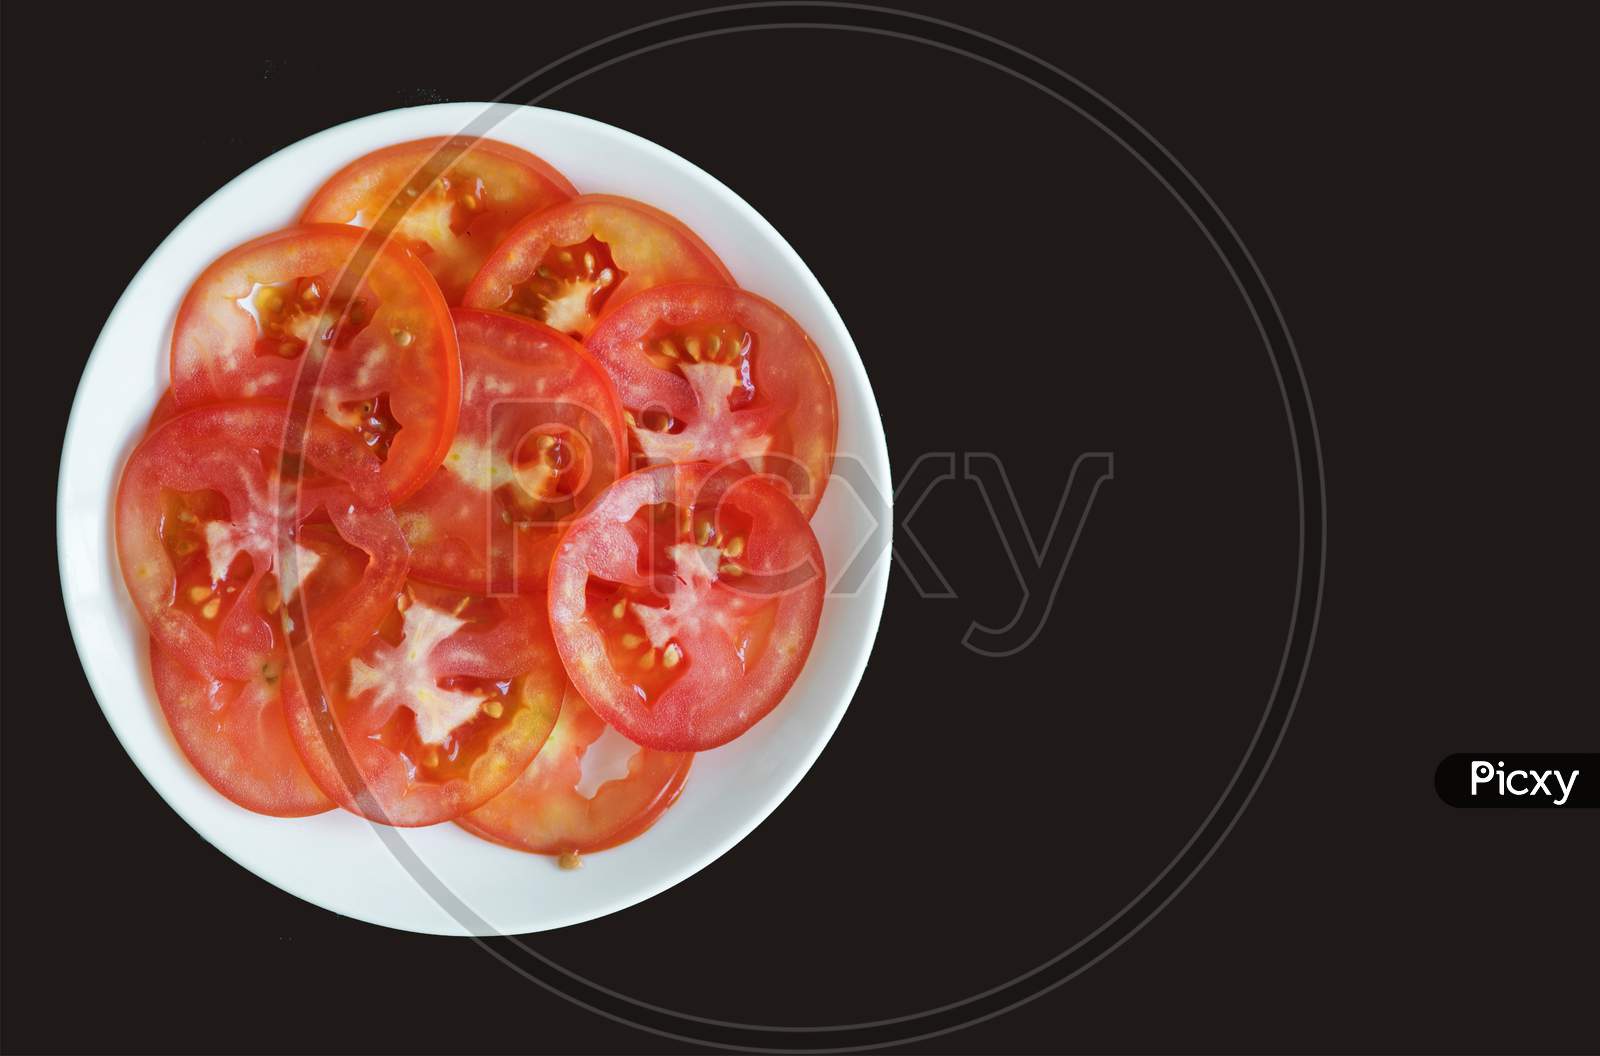 Tomato slices isolated on white bowl, black background